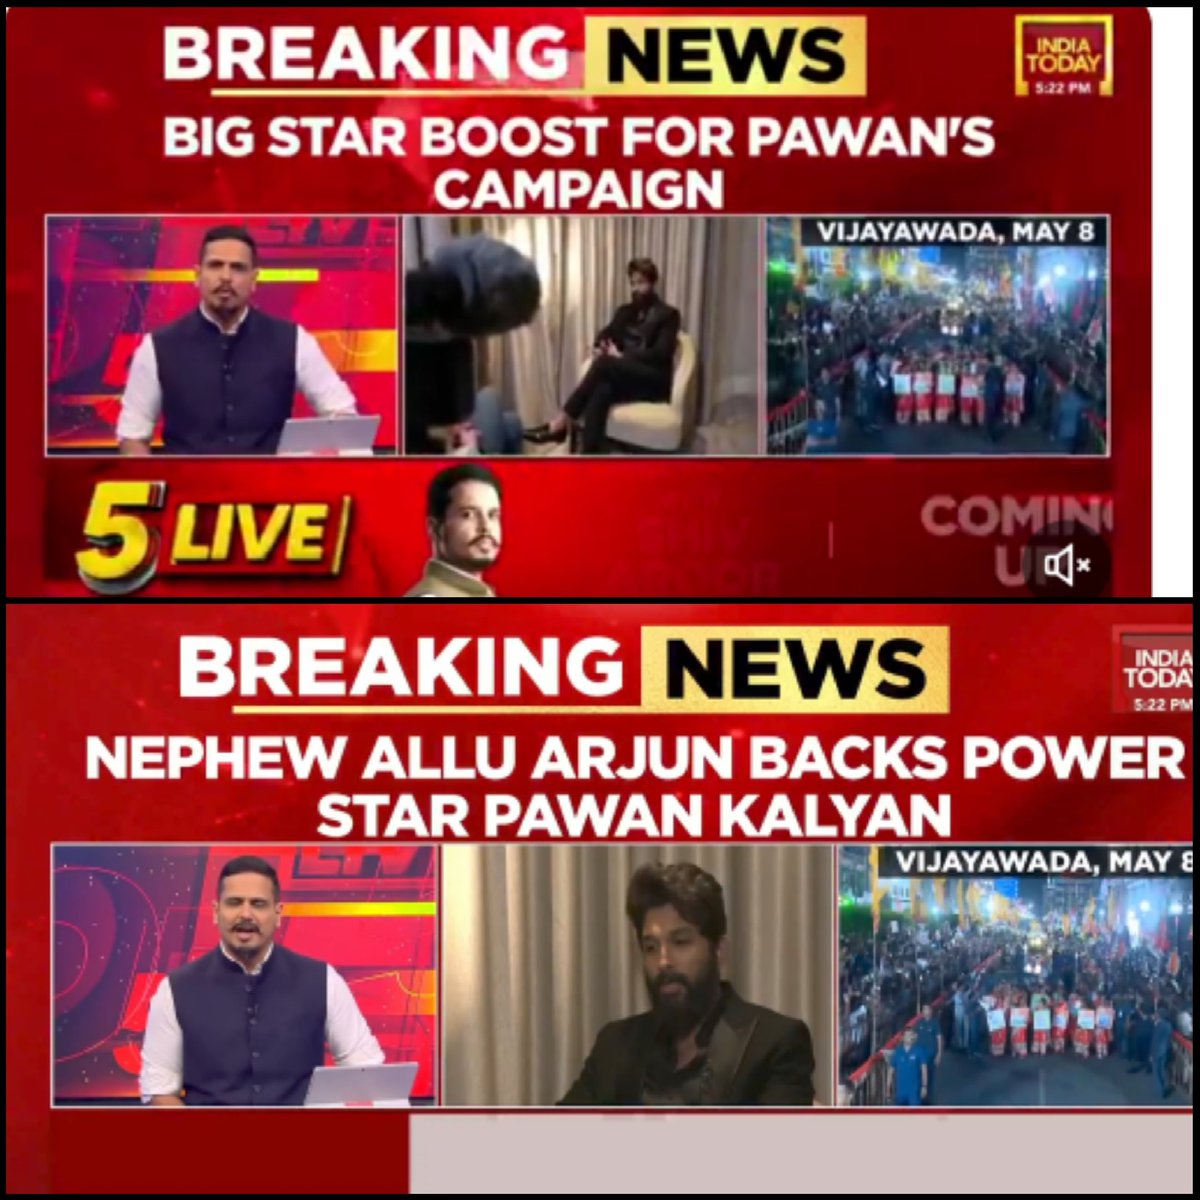 National Channel @IndiaToday news on @alluarjun's support for @PawanKalyan #Janasena 

Pan India star is always a sensation 🔥